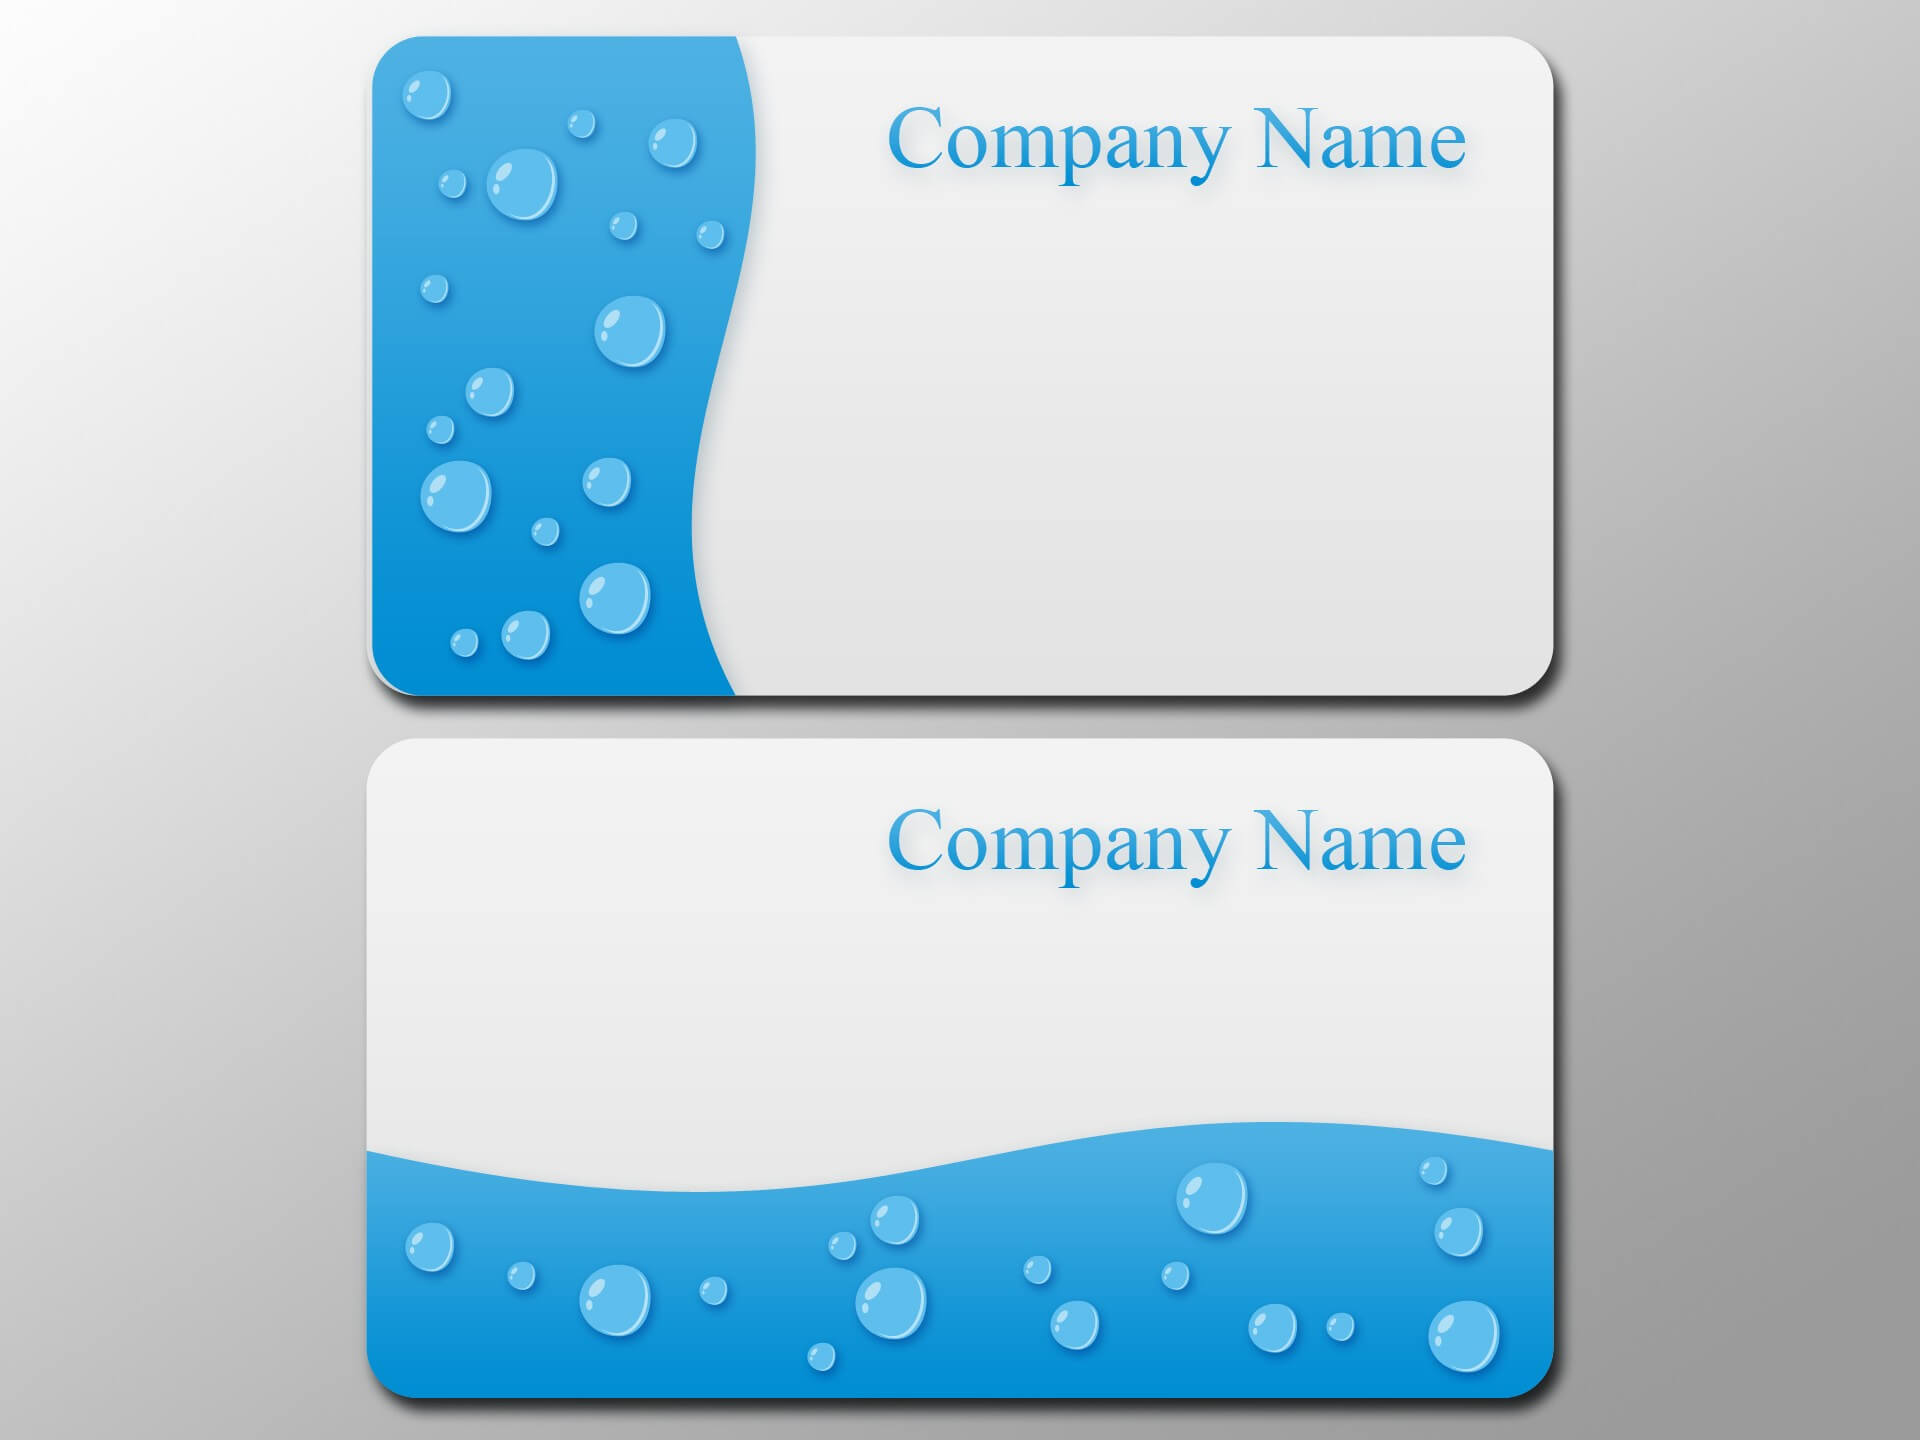 027 Template Ideas Business Card Psd Photoshop Size Blank Inside Business Card Template Size Photoshop